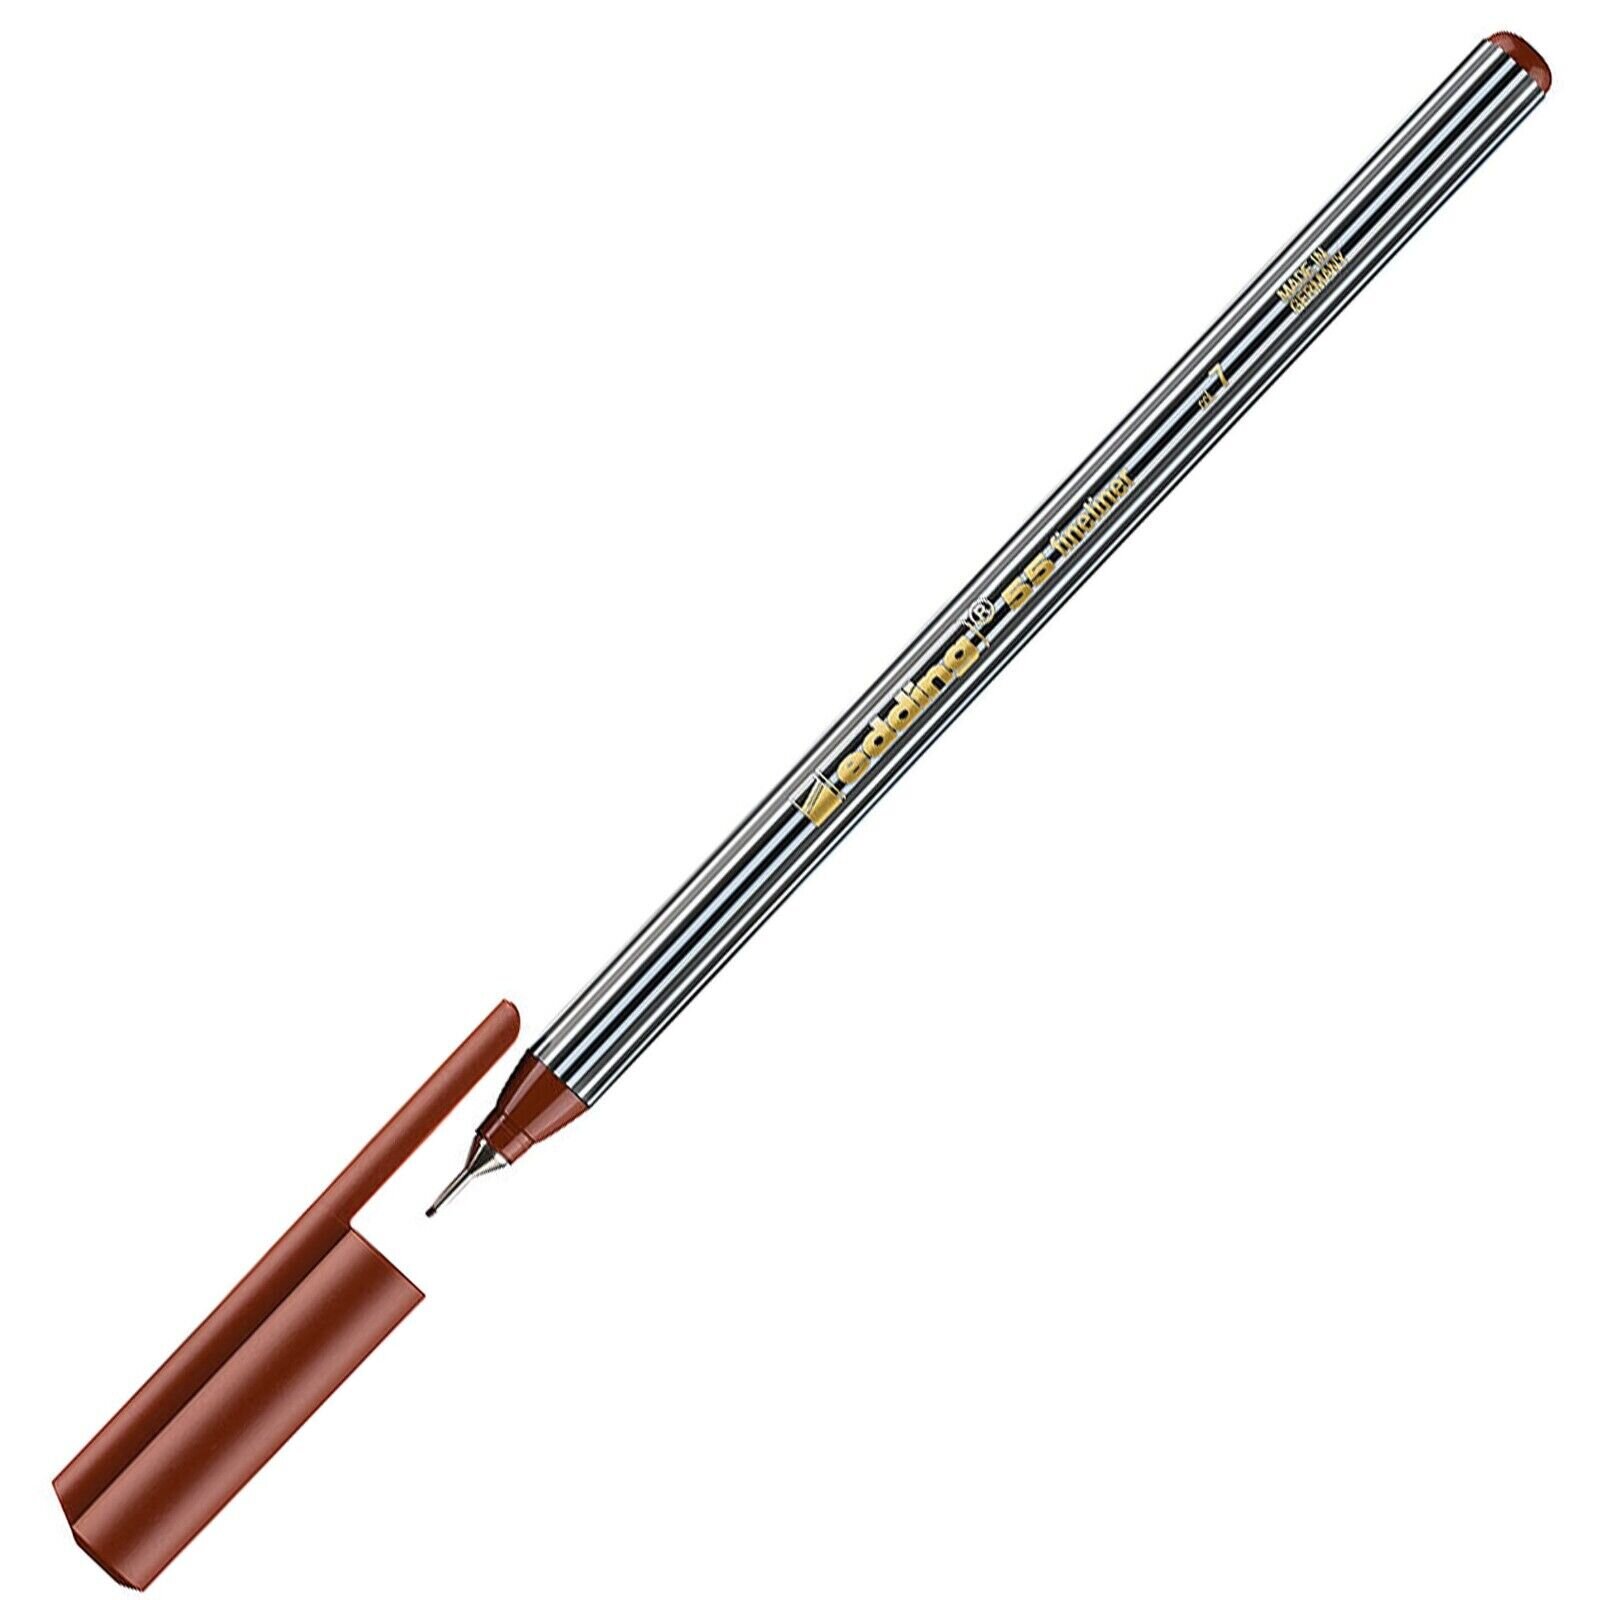 Edding 55 Fineliner Drawing Pen - 0.3mm Neddle Point Nib - Brown Ink - Single